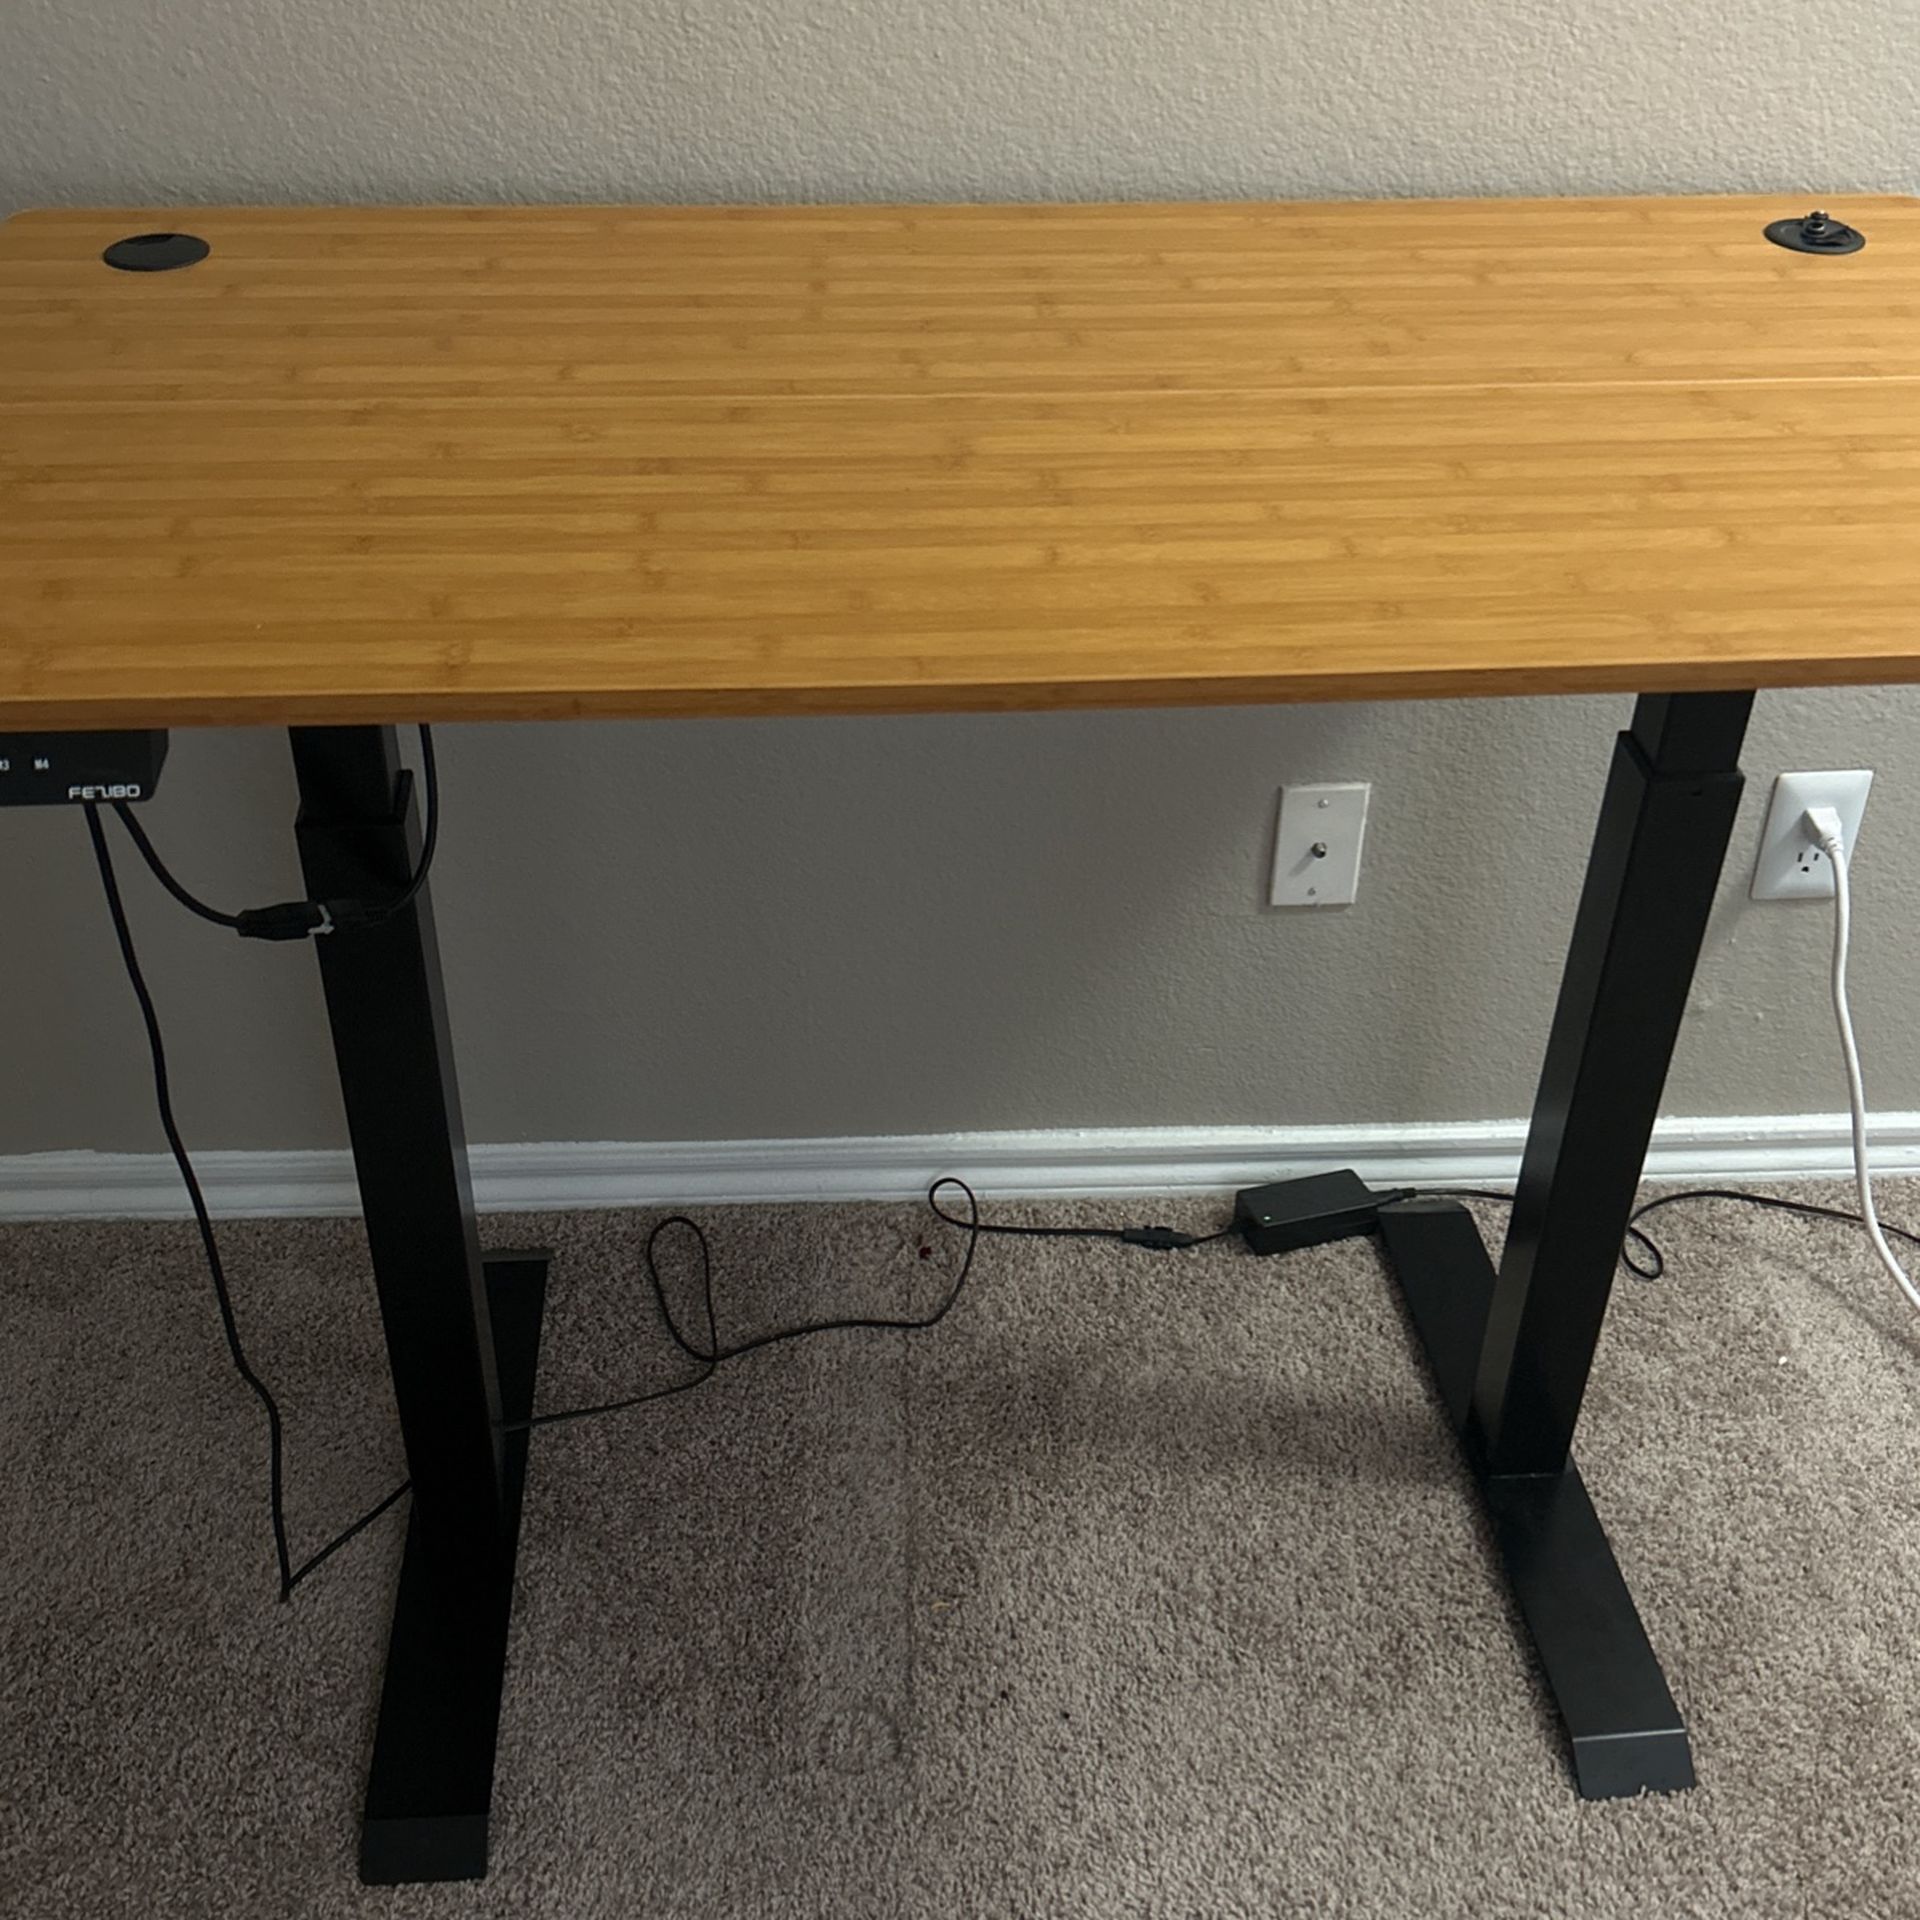 Fezibo Electric Height Adjustable Office Desk